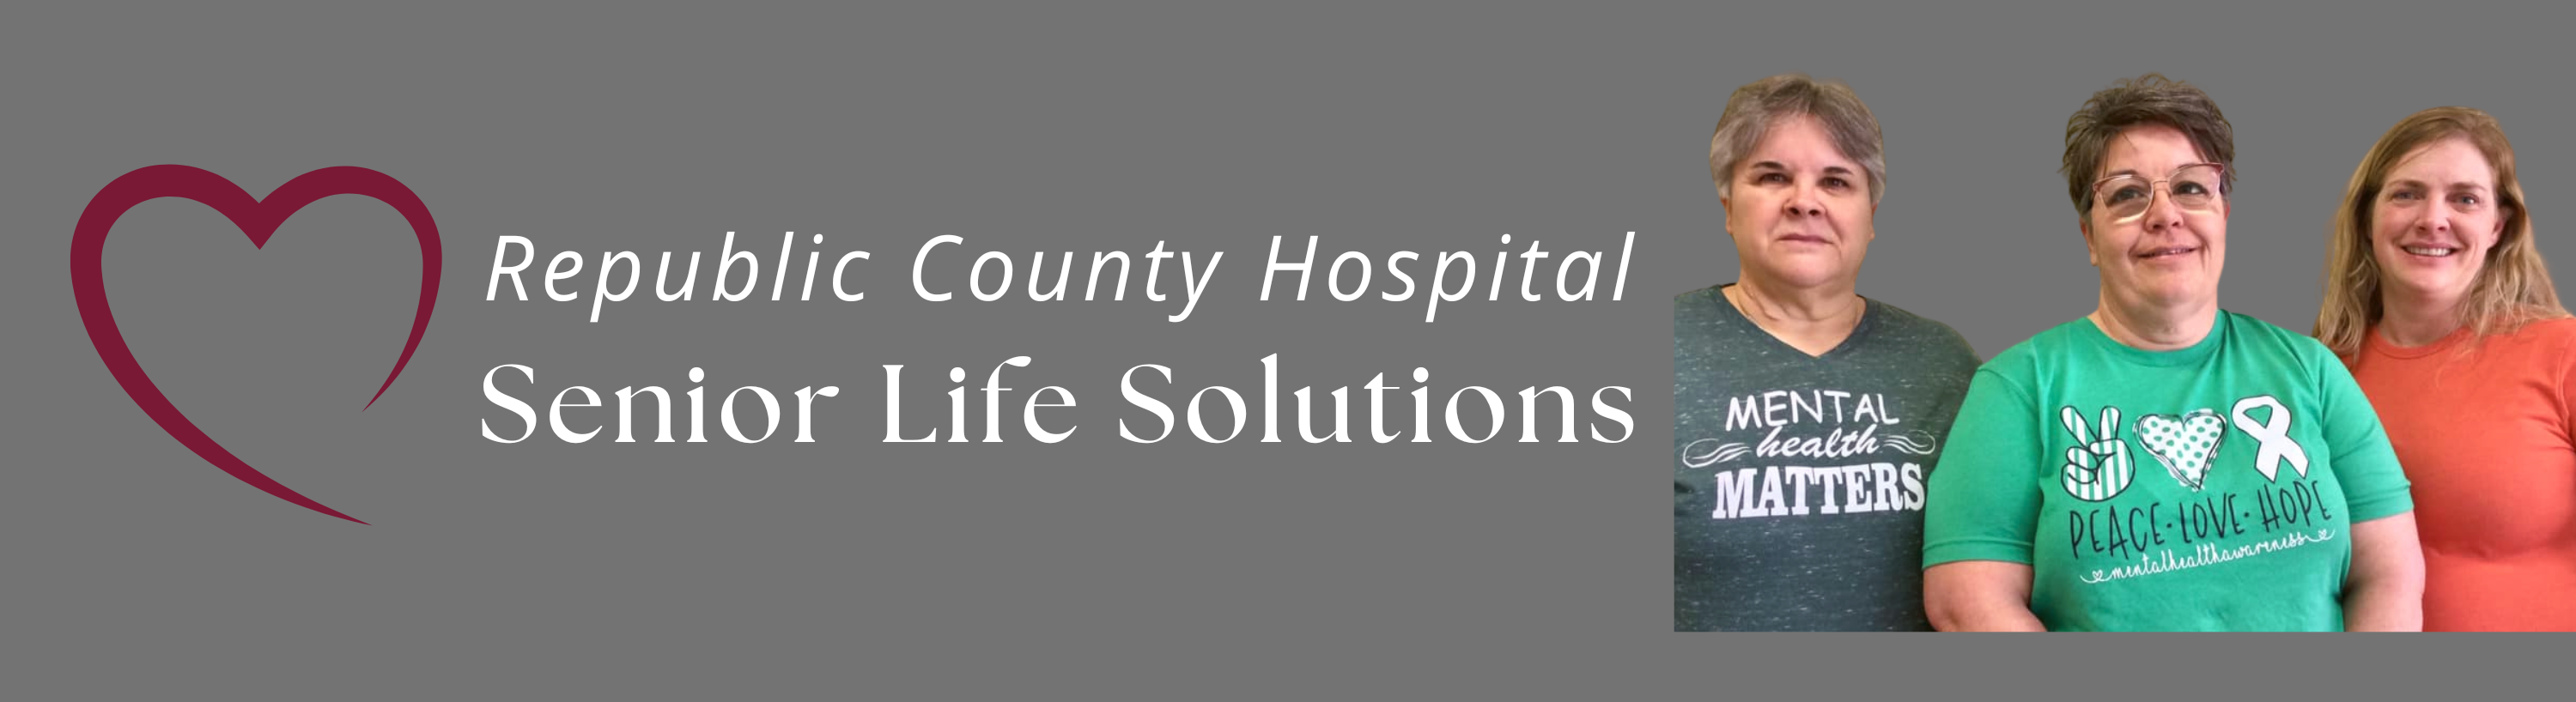 Republic County Hospital
Senior Life Solutions